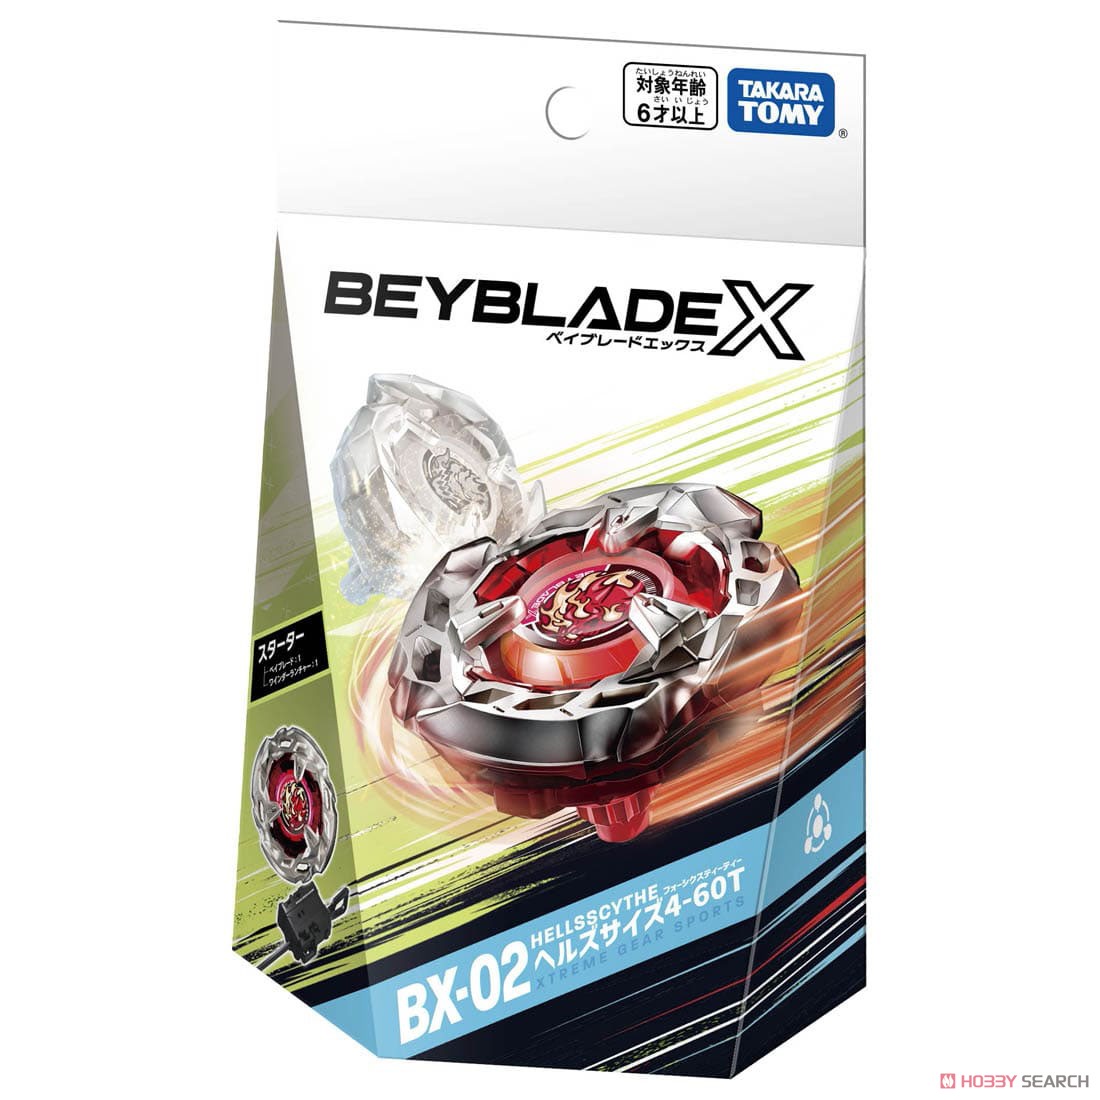 BEYBLADE X BX-02 スターター ヘルズサイズ4-60T (スポーツ玩具) パッケージ1